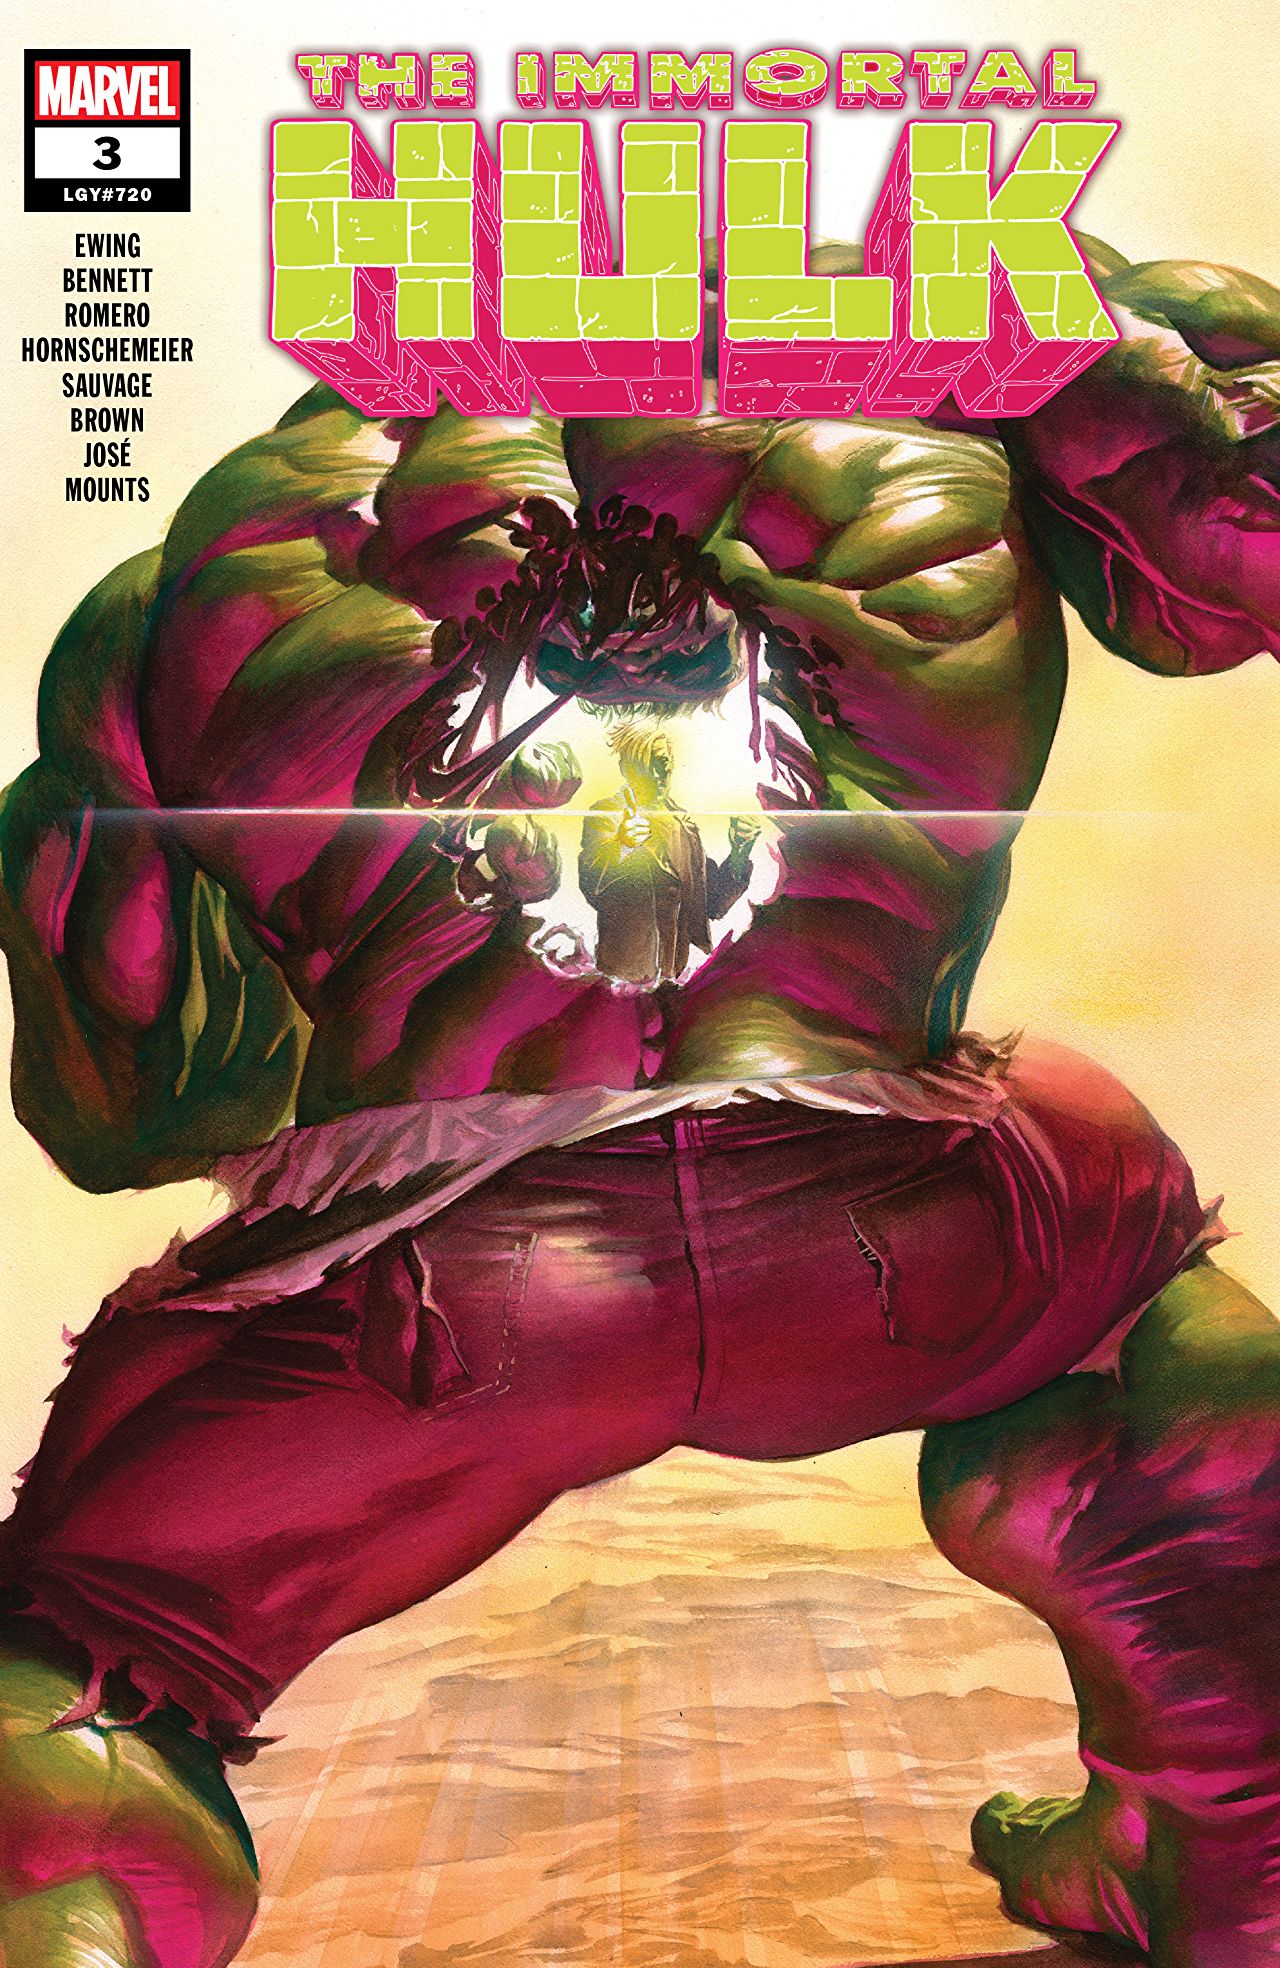 Immortal Hulk #3 review: Eyewitnesses under scrutiny